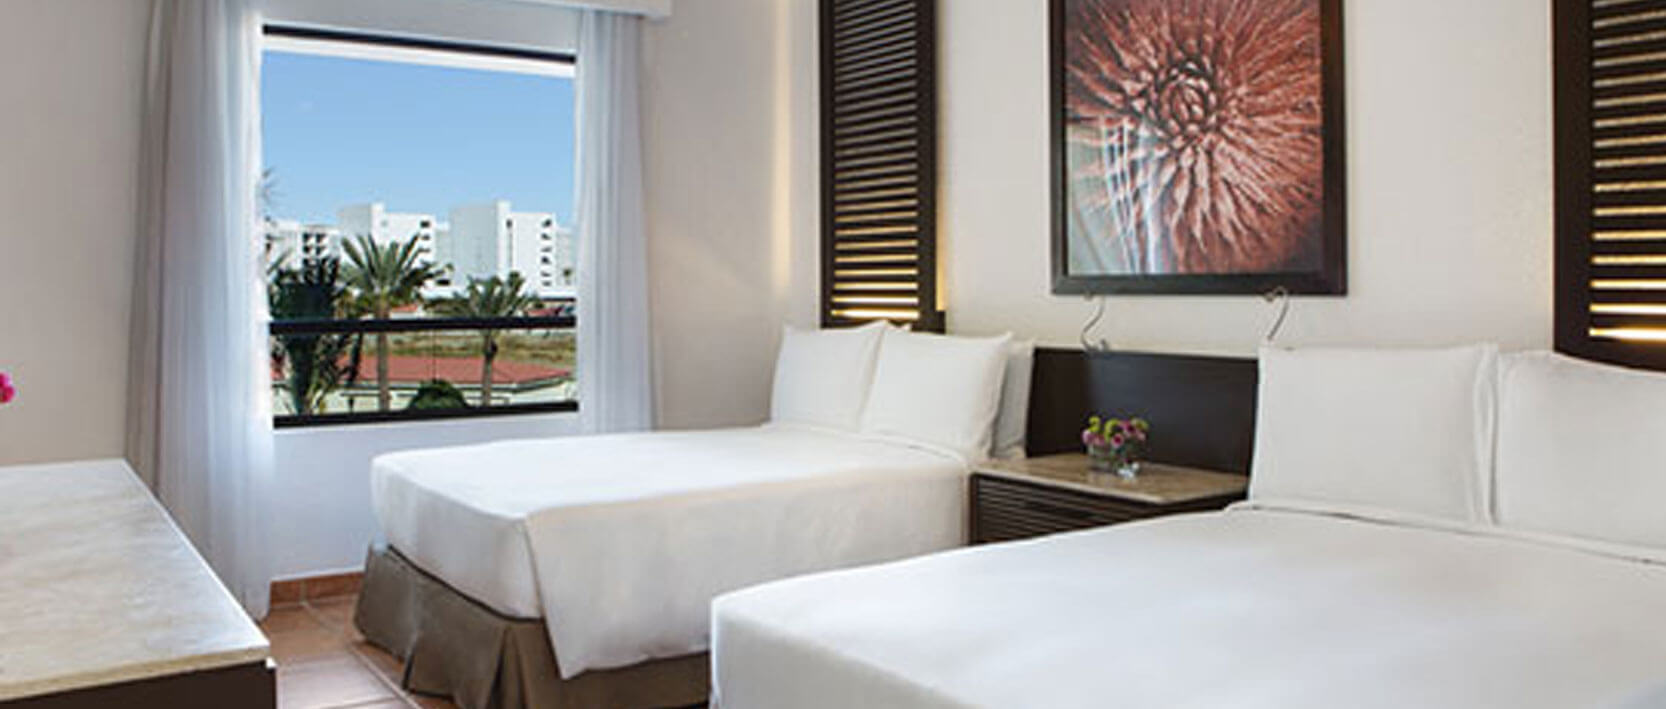 Hyatt Ziva Los Cabos Accommodations - Ocean View Two Bedroom Master Suite